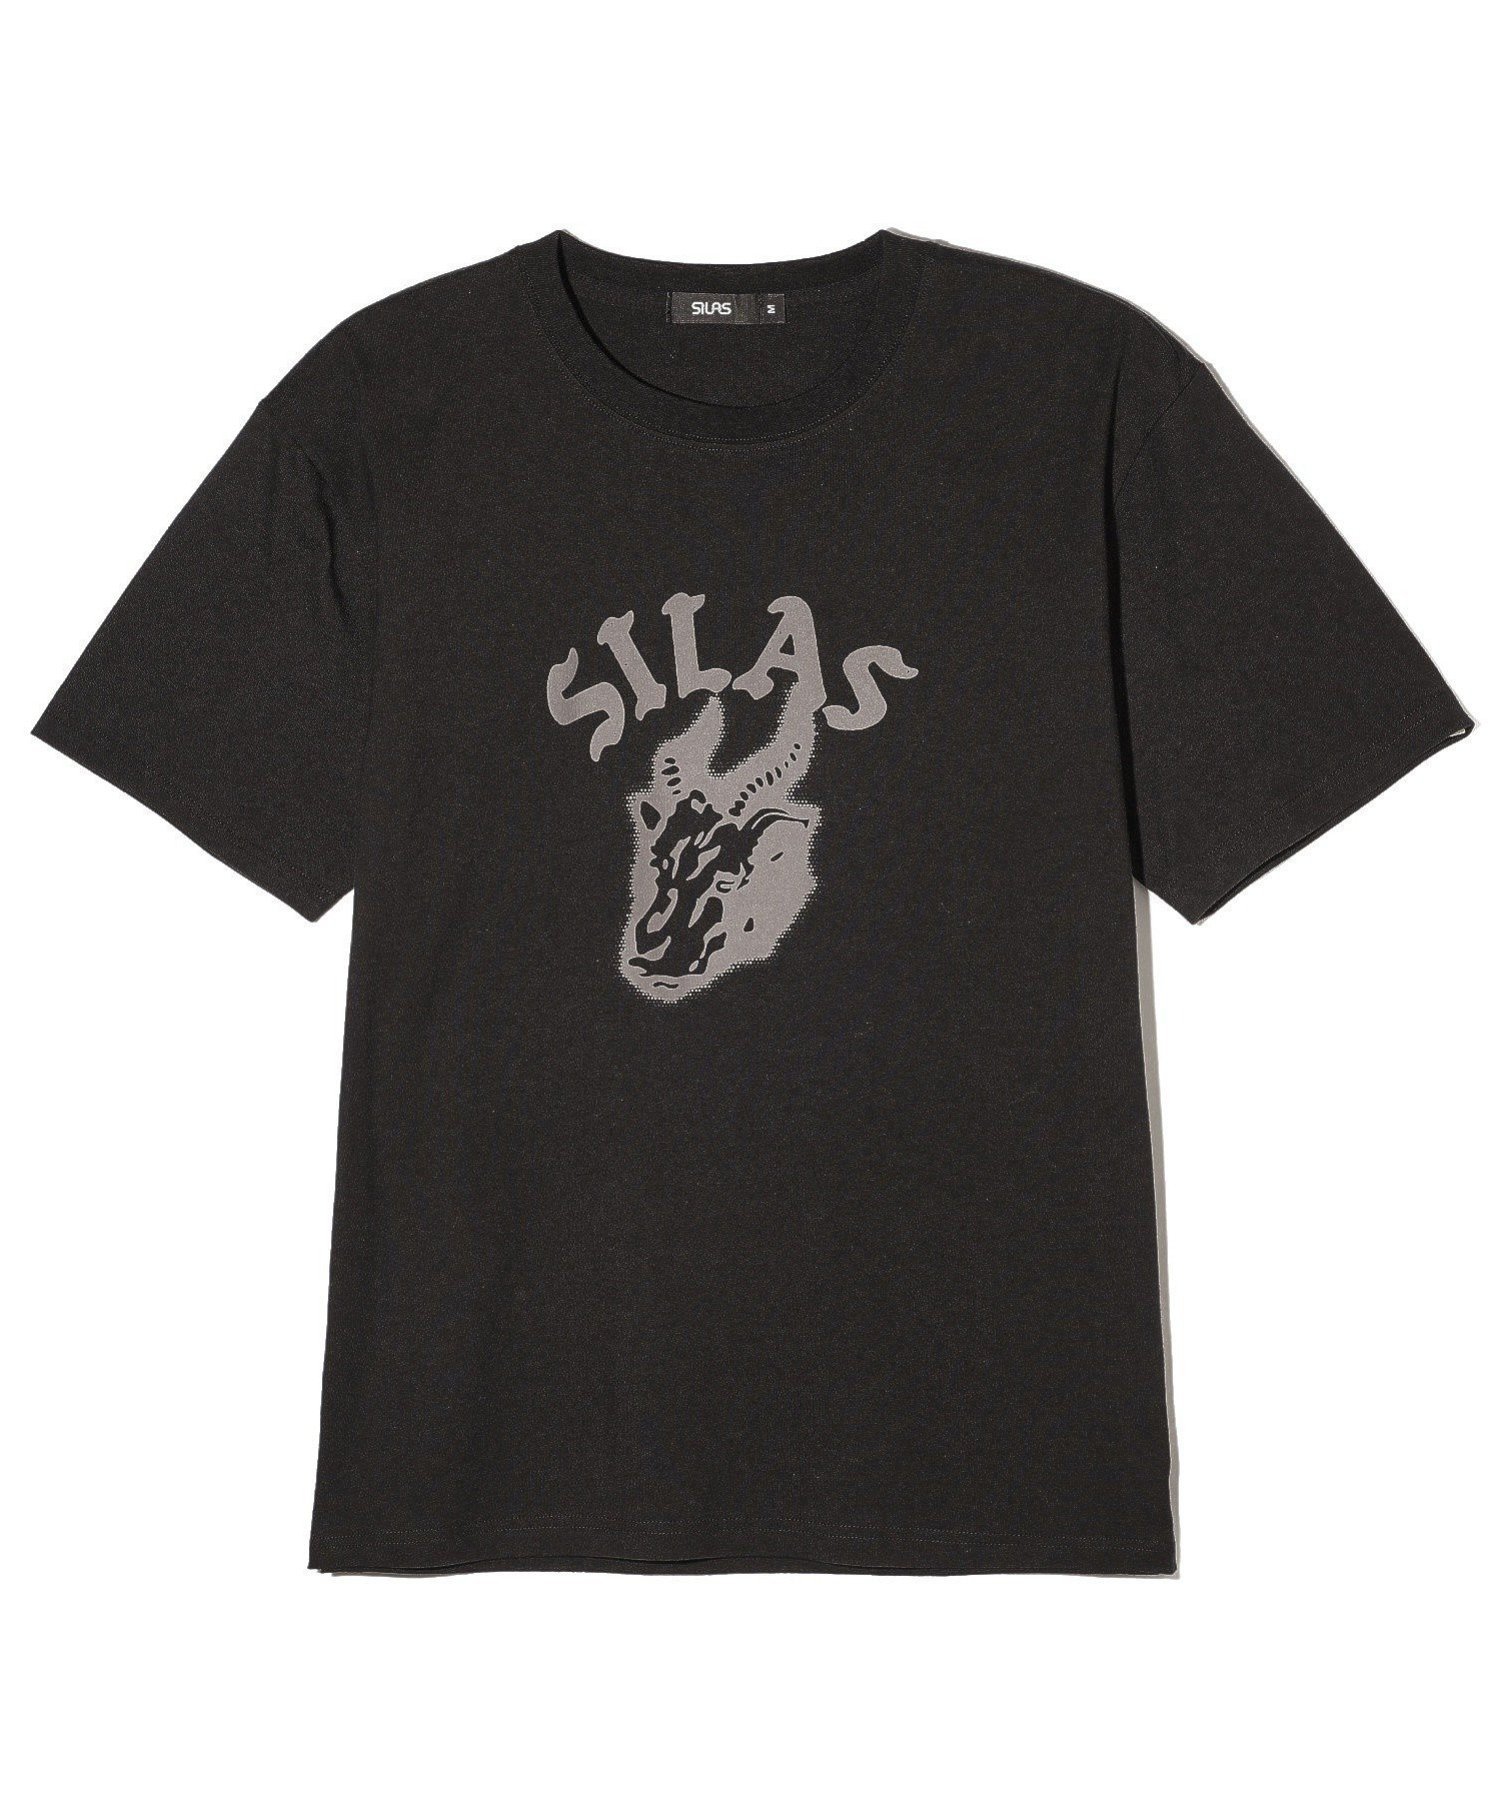 SILAS GOAT S/S TEE SILAS サイラス トップス カットソー Tシャツ ブラック グレー ホワイト【送料無料】